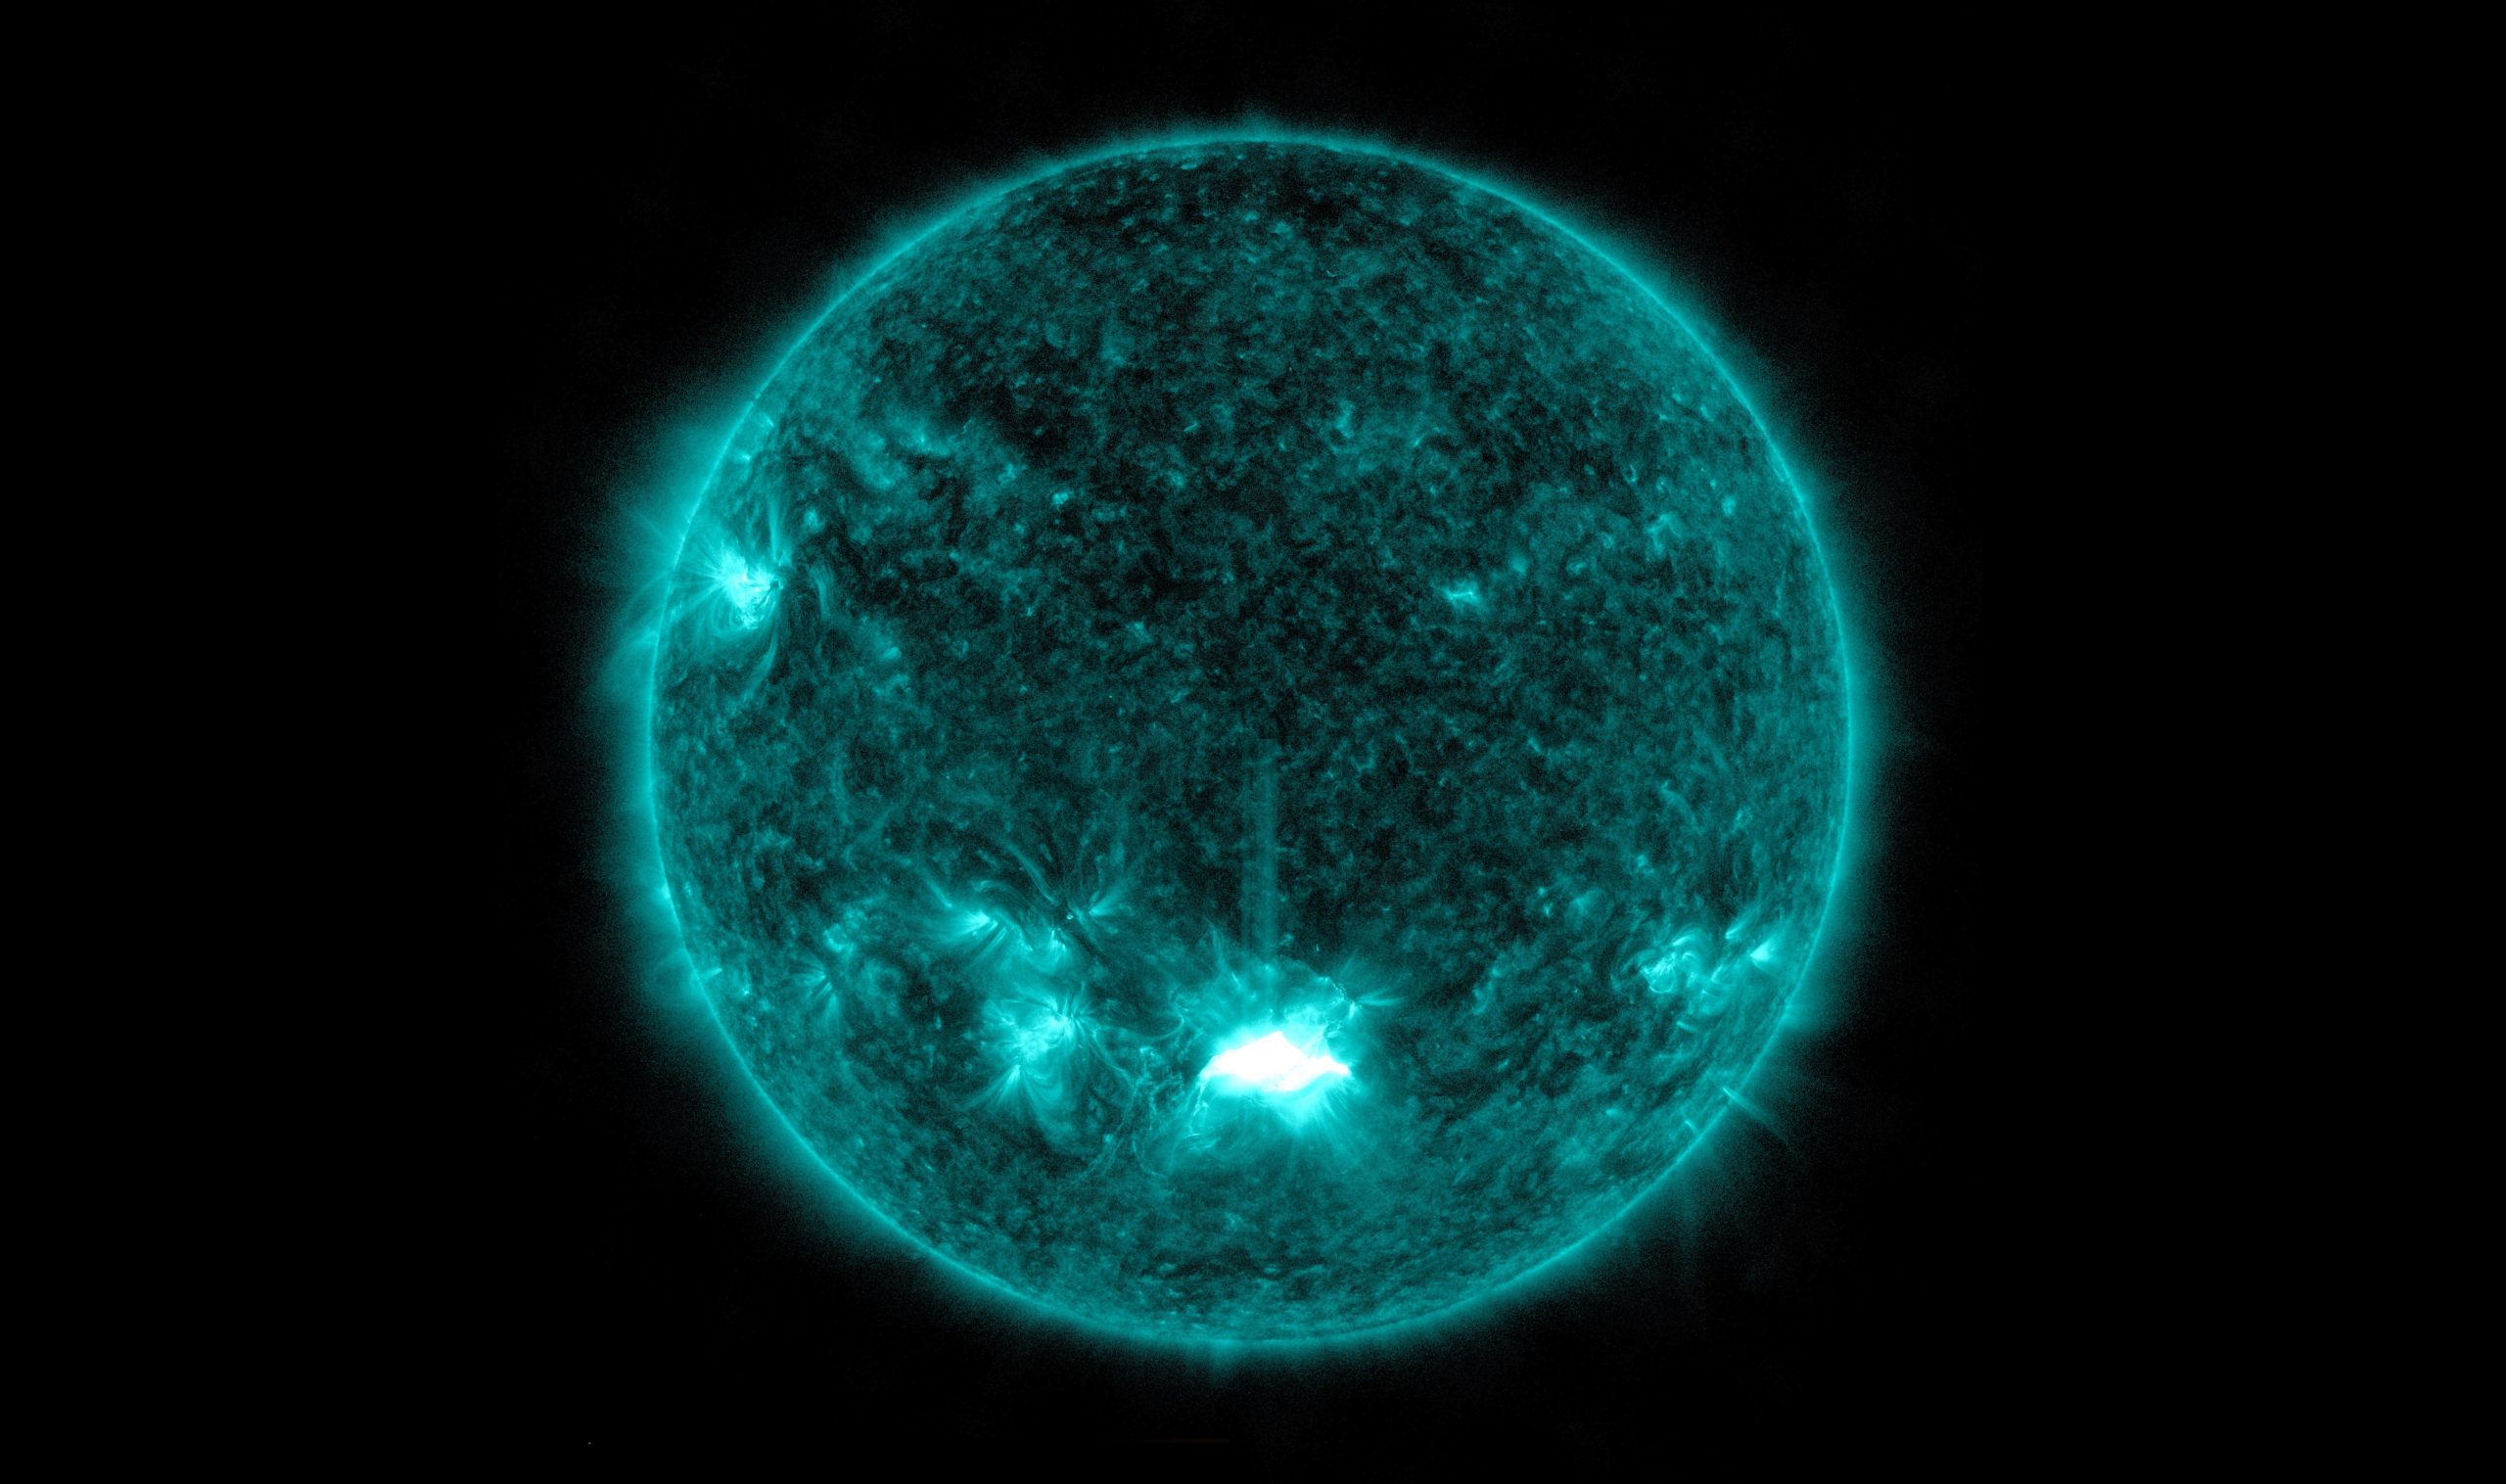 Image of the latest powerful X-class solar flare. Credit: NASA/GSFC/SDO